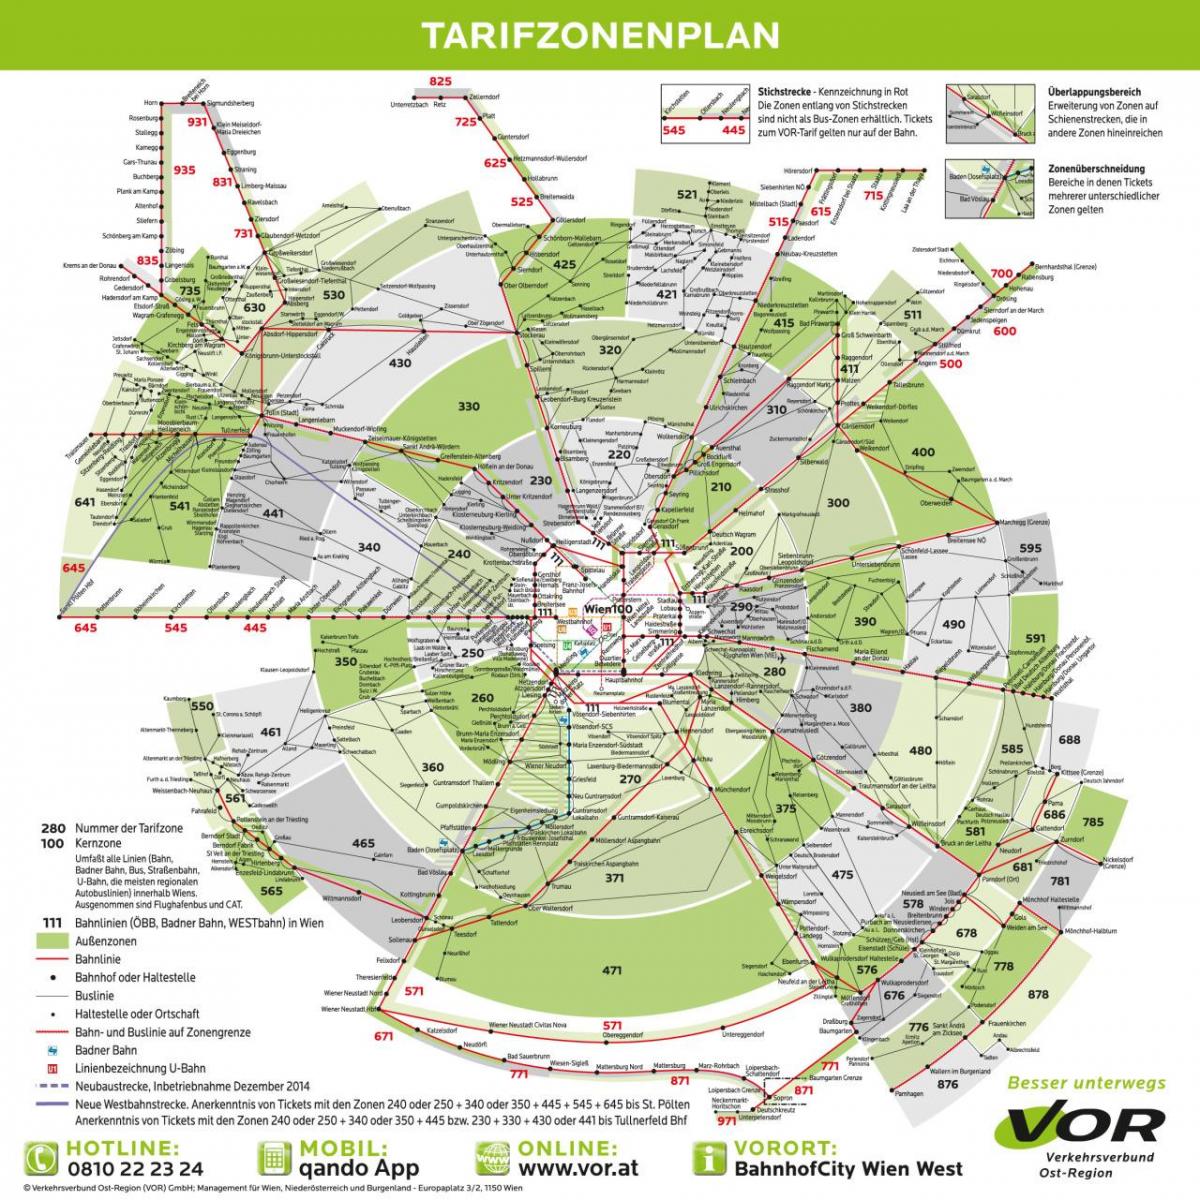 Kart over Wien t-sone 100